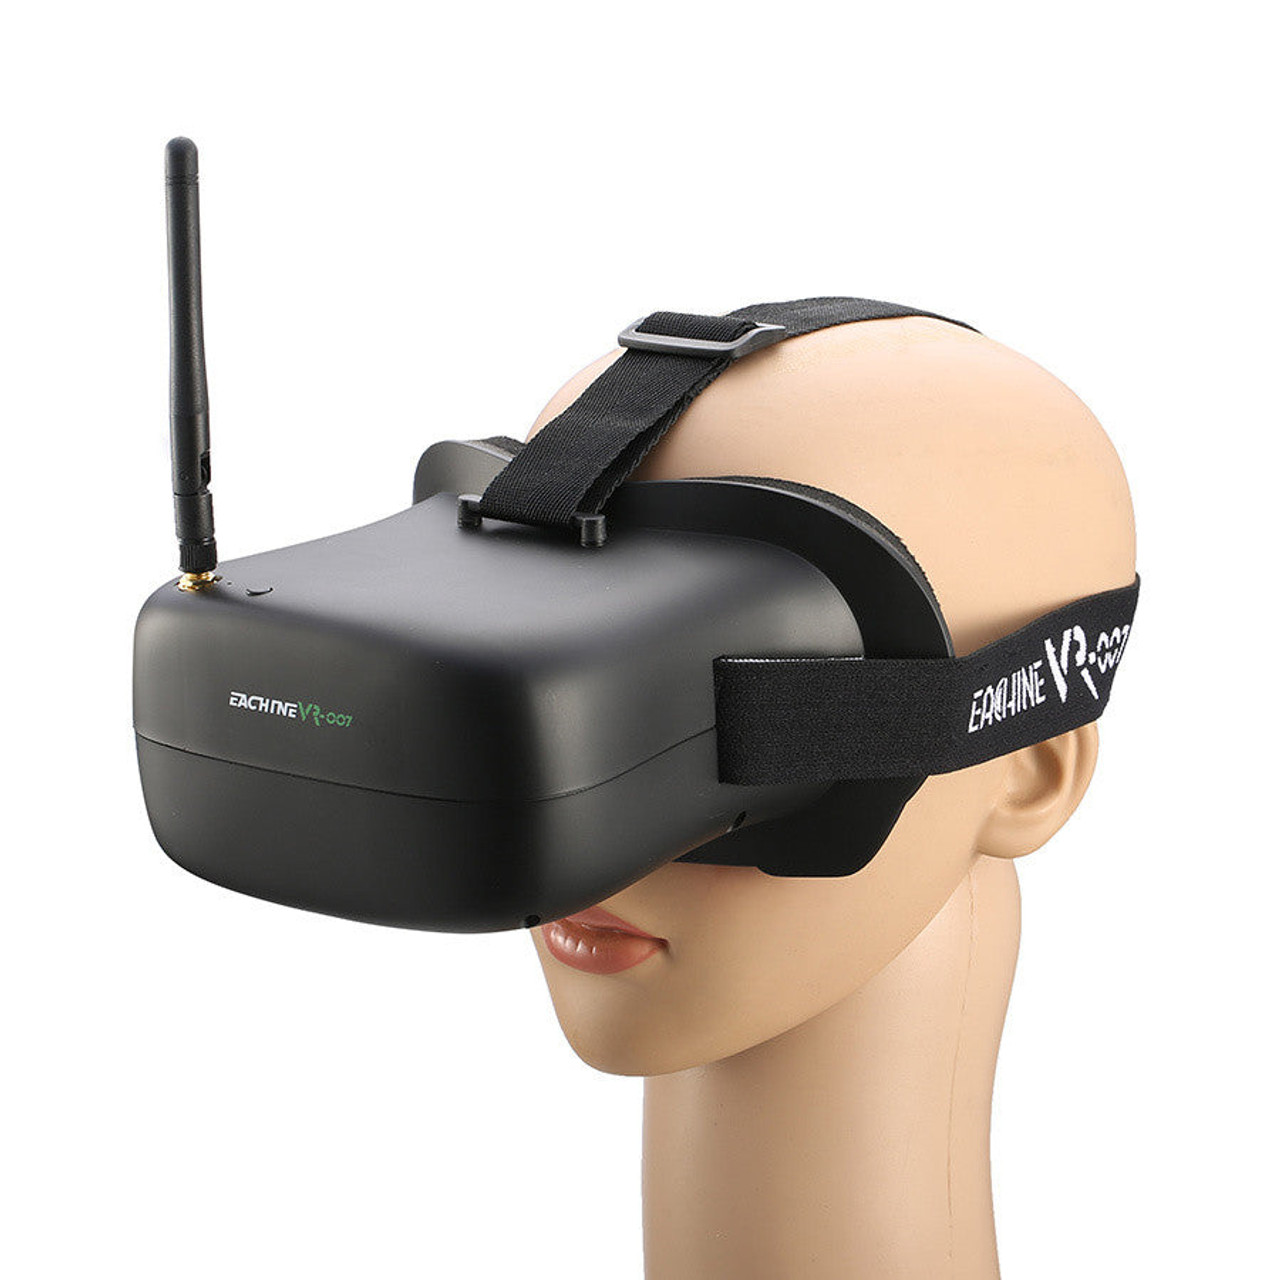 VR-007 VR007 5.8G 4.3 Inch HD FPV Goggles